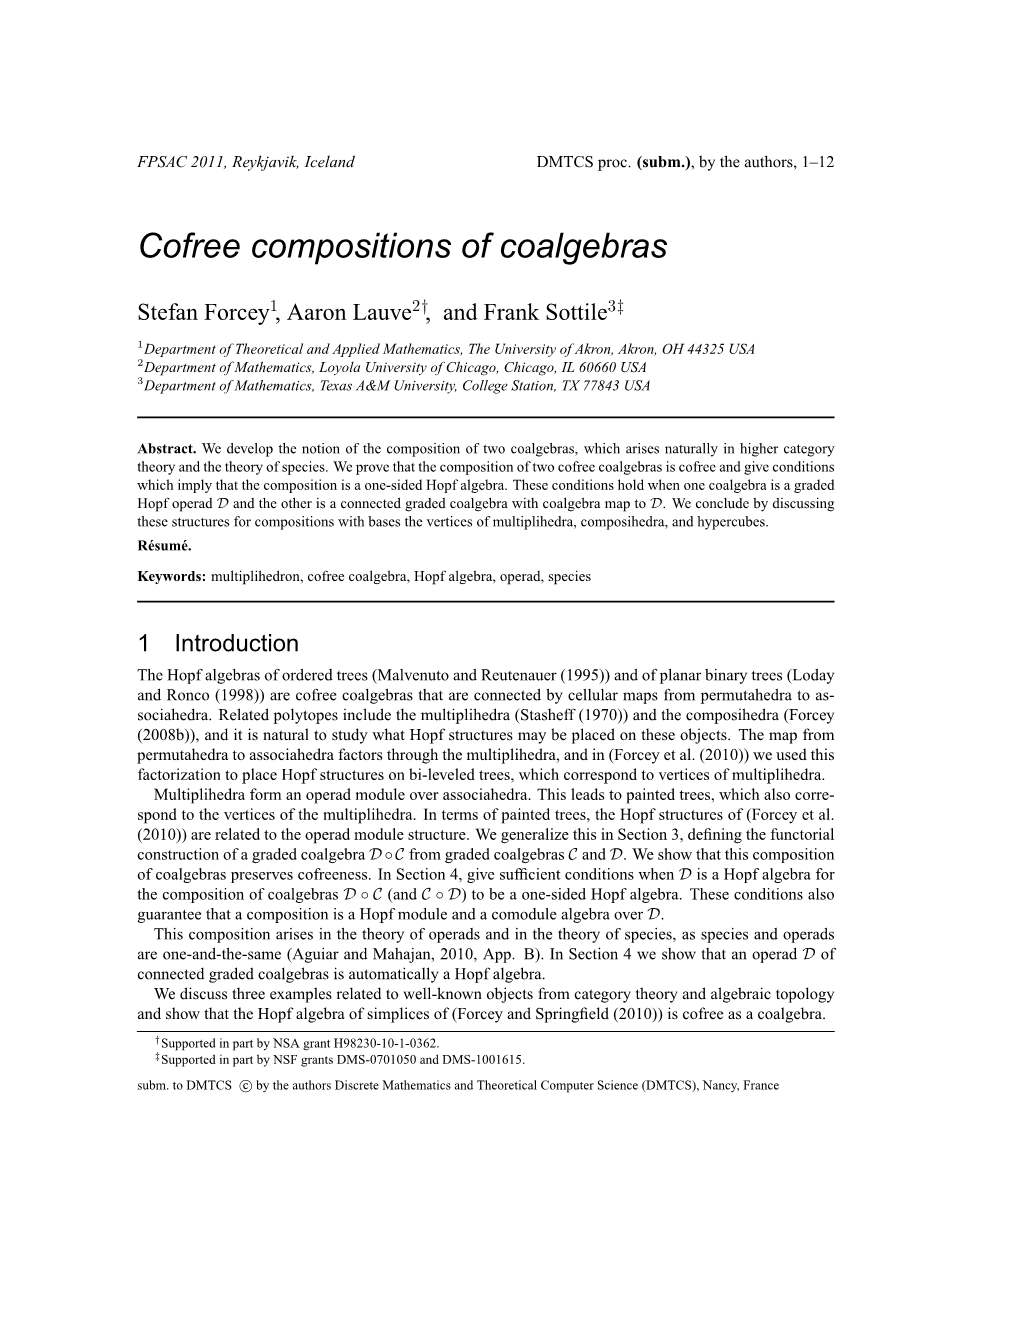 Cofree Compositions of Coalgebras